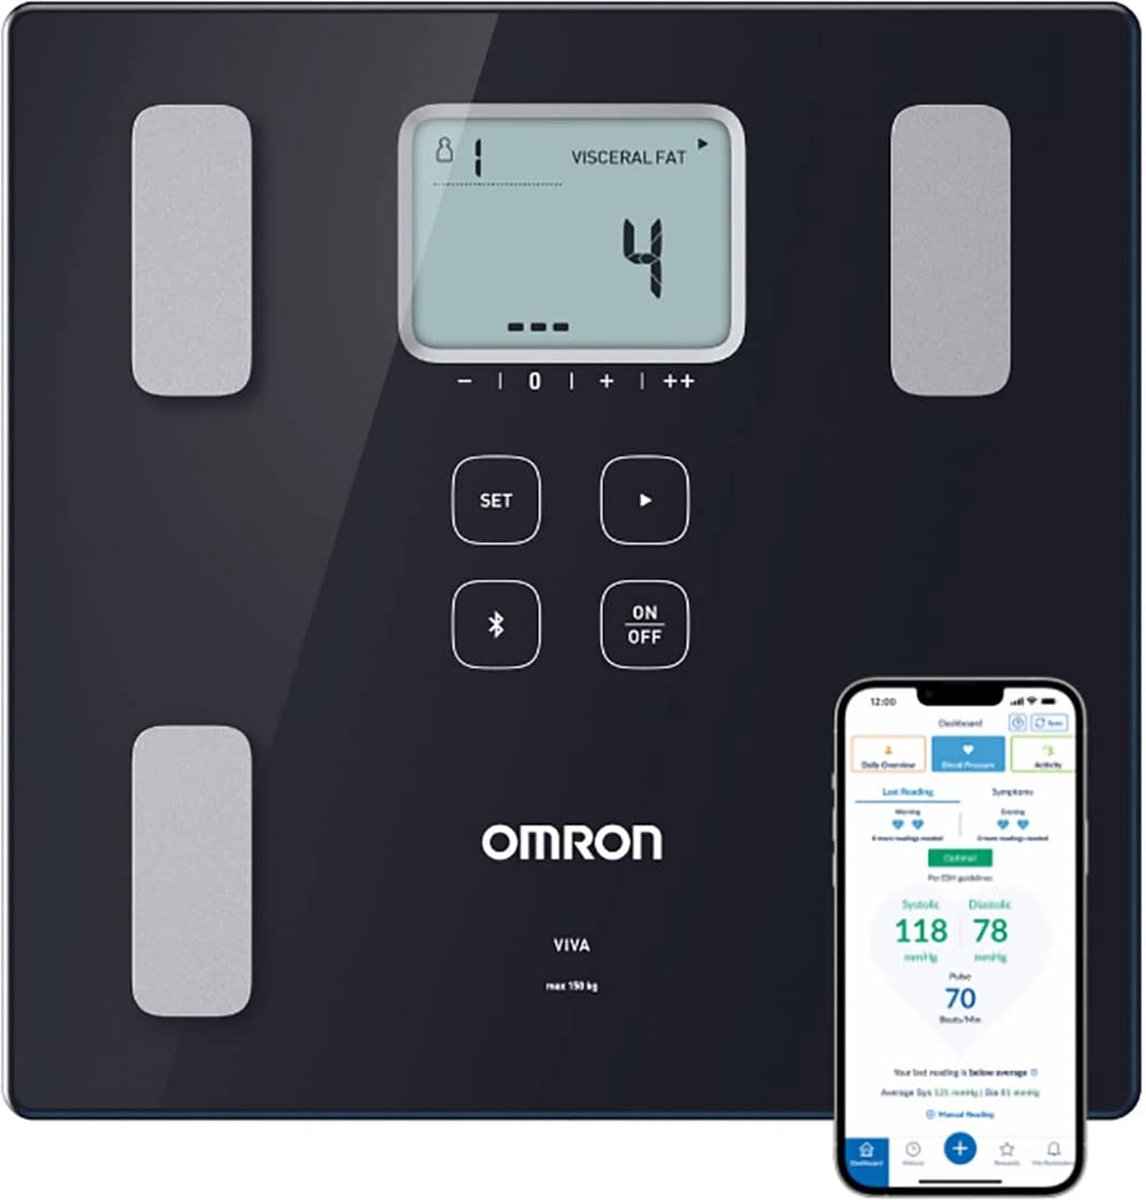 OMRON VIVA Slimme Bluetooth Weegschaal review